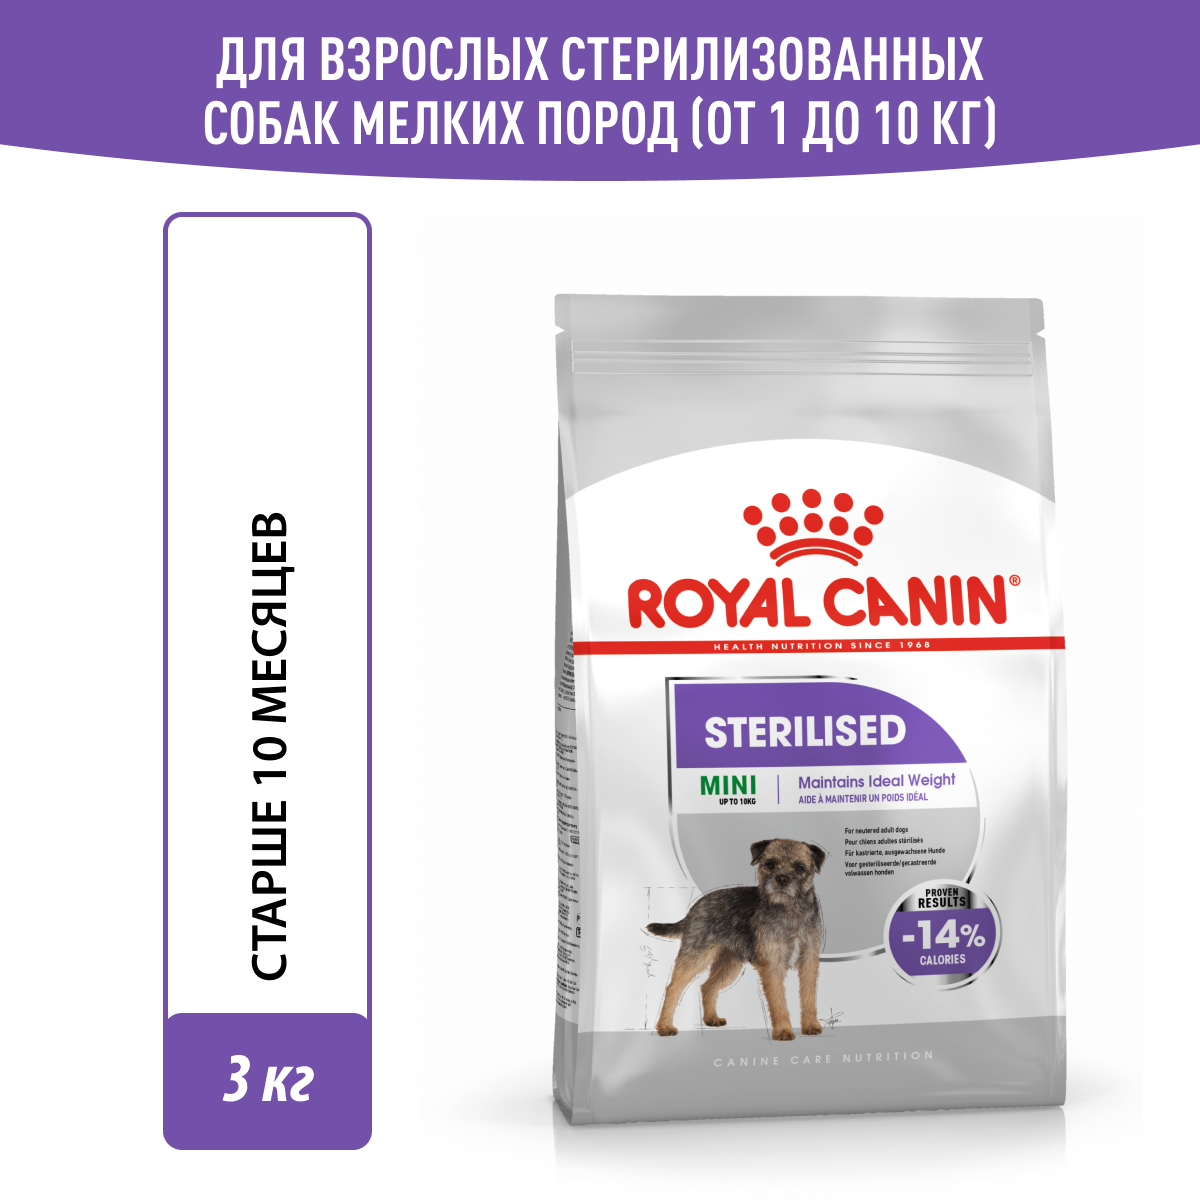 Royal Canin - Корм для собак малых пород, стерилизованных (mini sterilised) 3кг